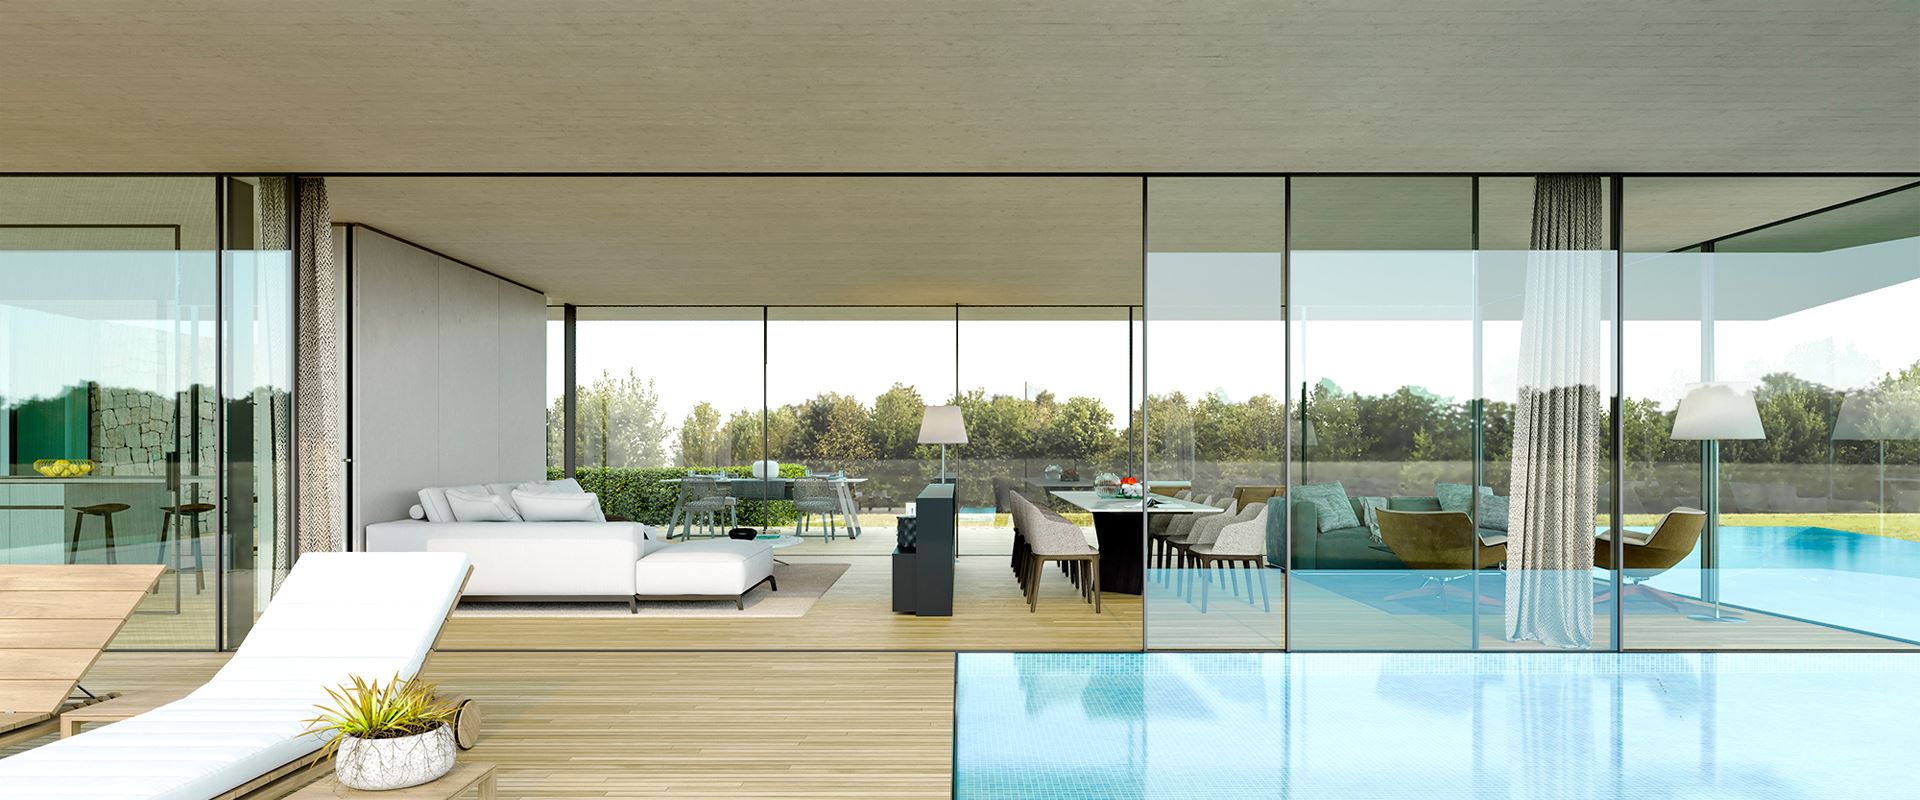 Modern Interior - Gallardo Llopis Architect